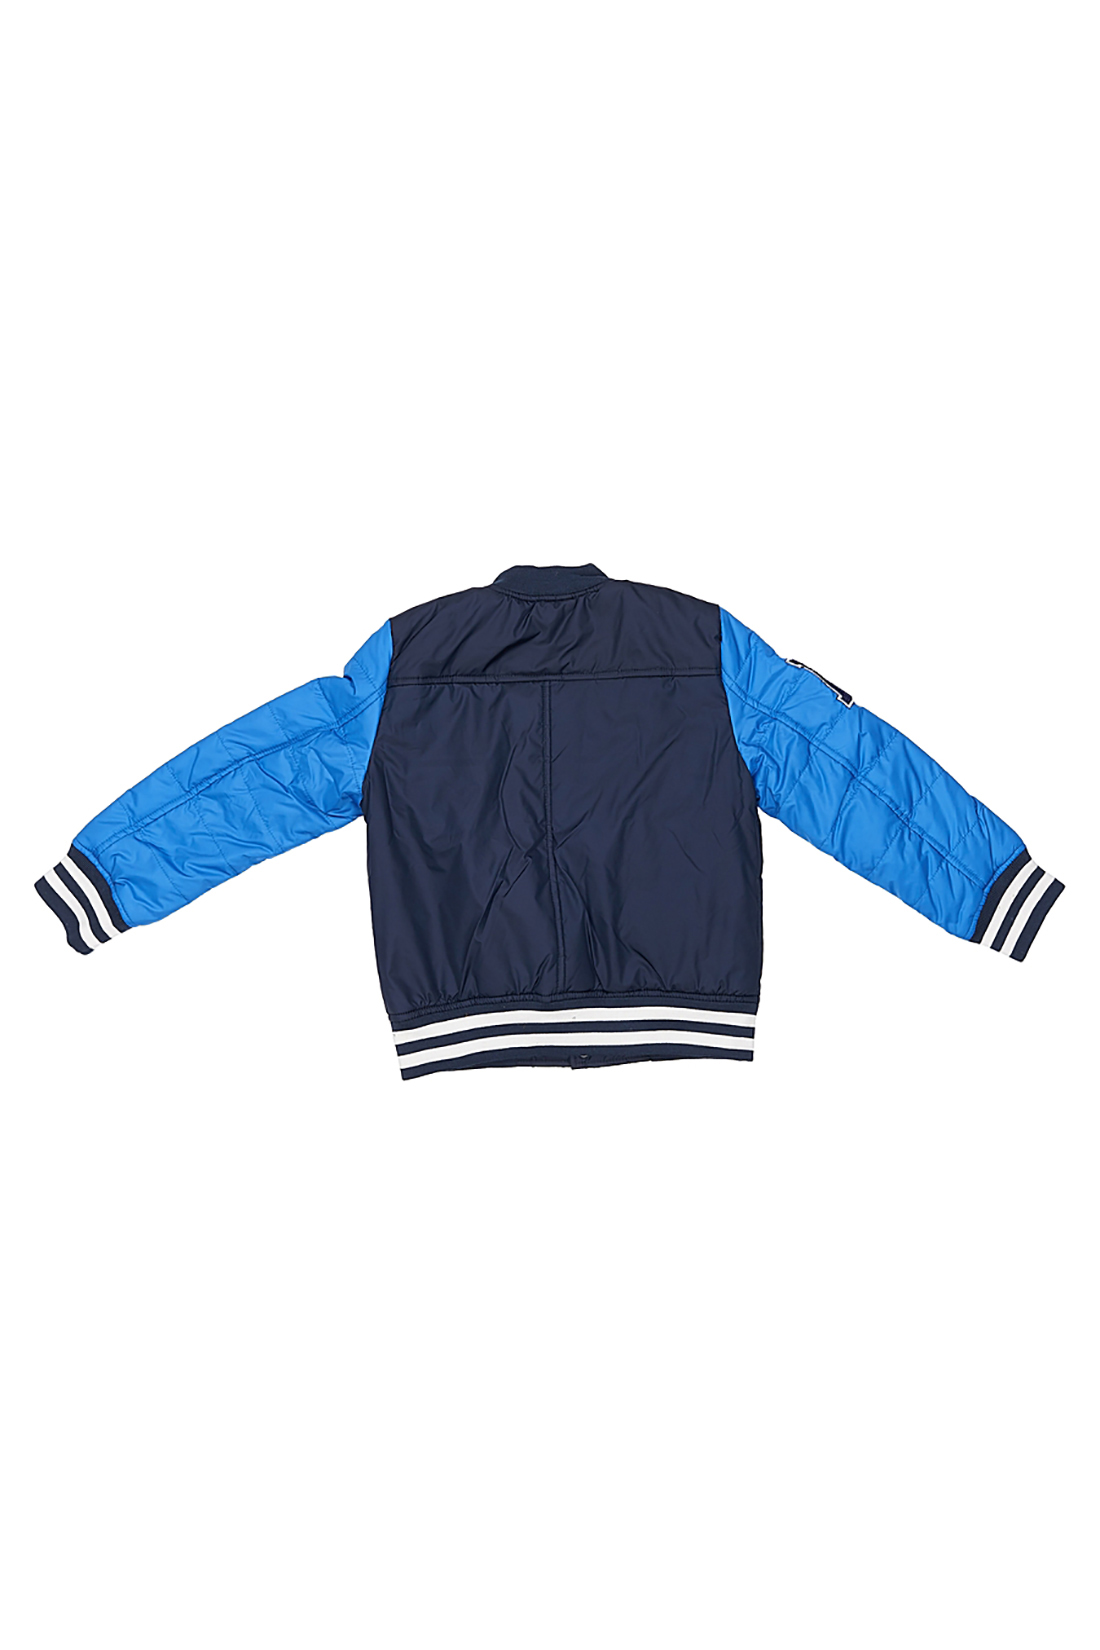 Куртка для мальчика (арт. baon BK538003), размер 110-116, цвет синий Куртка для мальчика (арт. baon BK538003) - фото 3